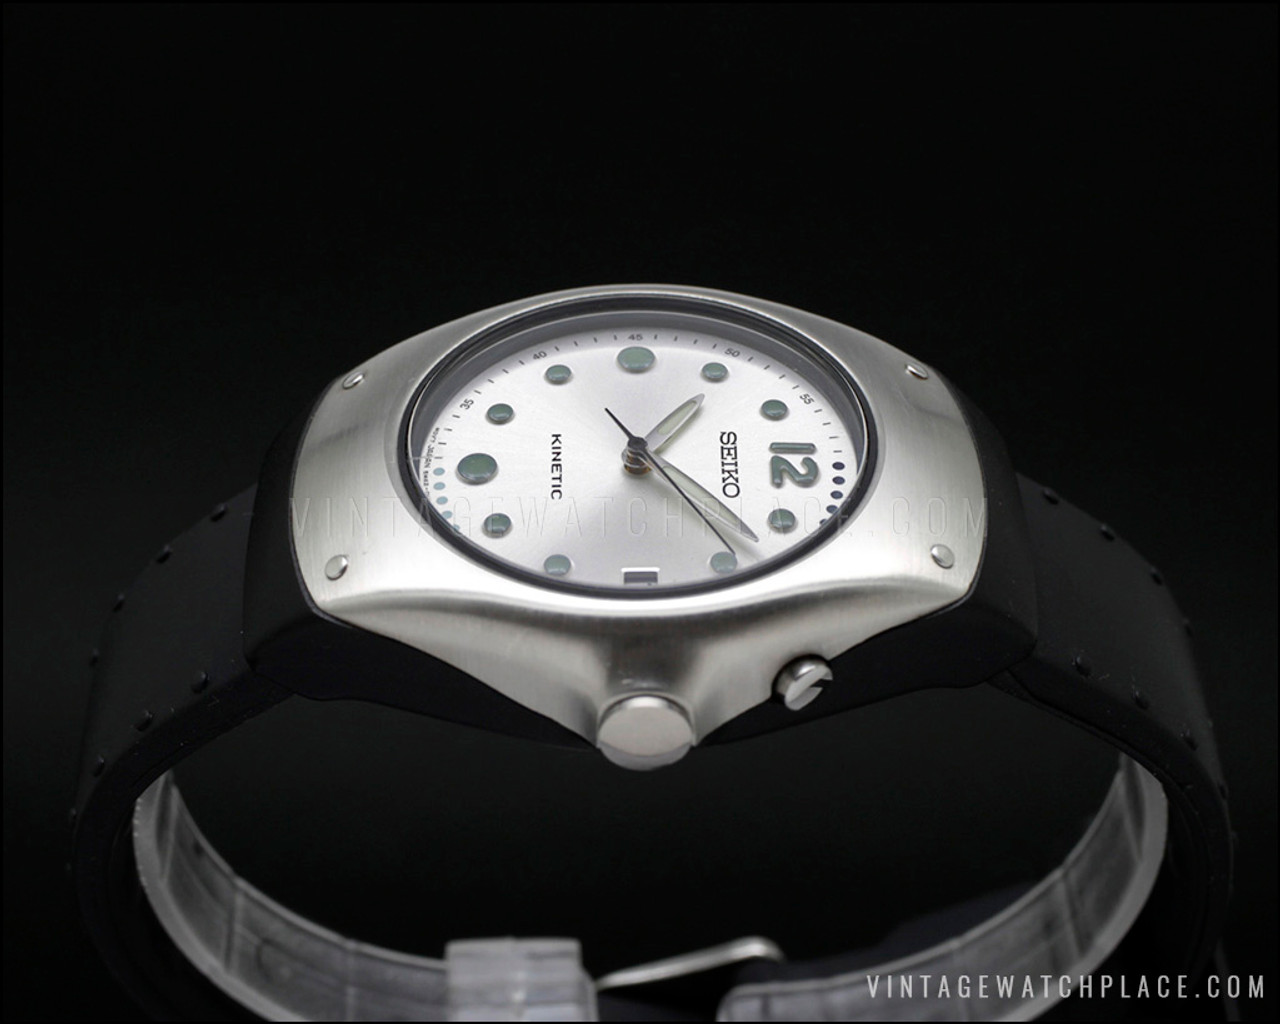 New Old Stock SEIKO ARCTURA KINETIC 5M42-0E49, original strap, new  capacitor, very scarce, vintage retro quartz watch NOS.